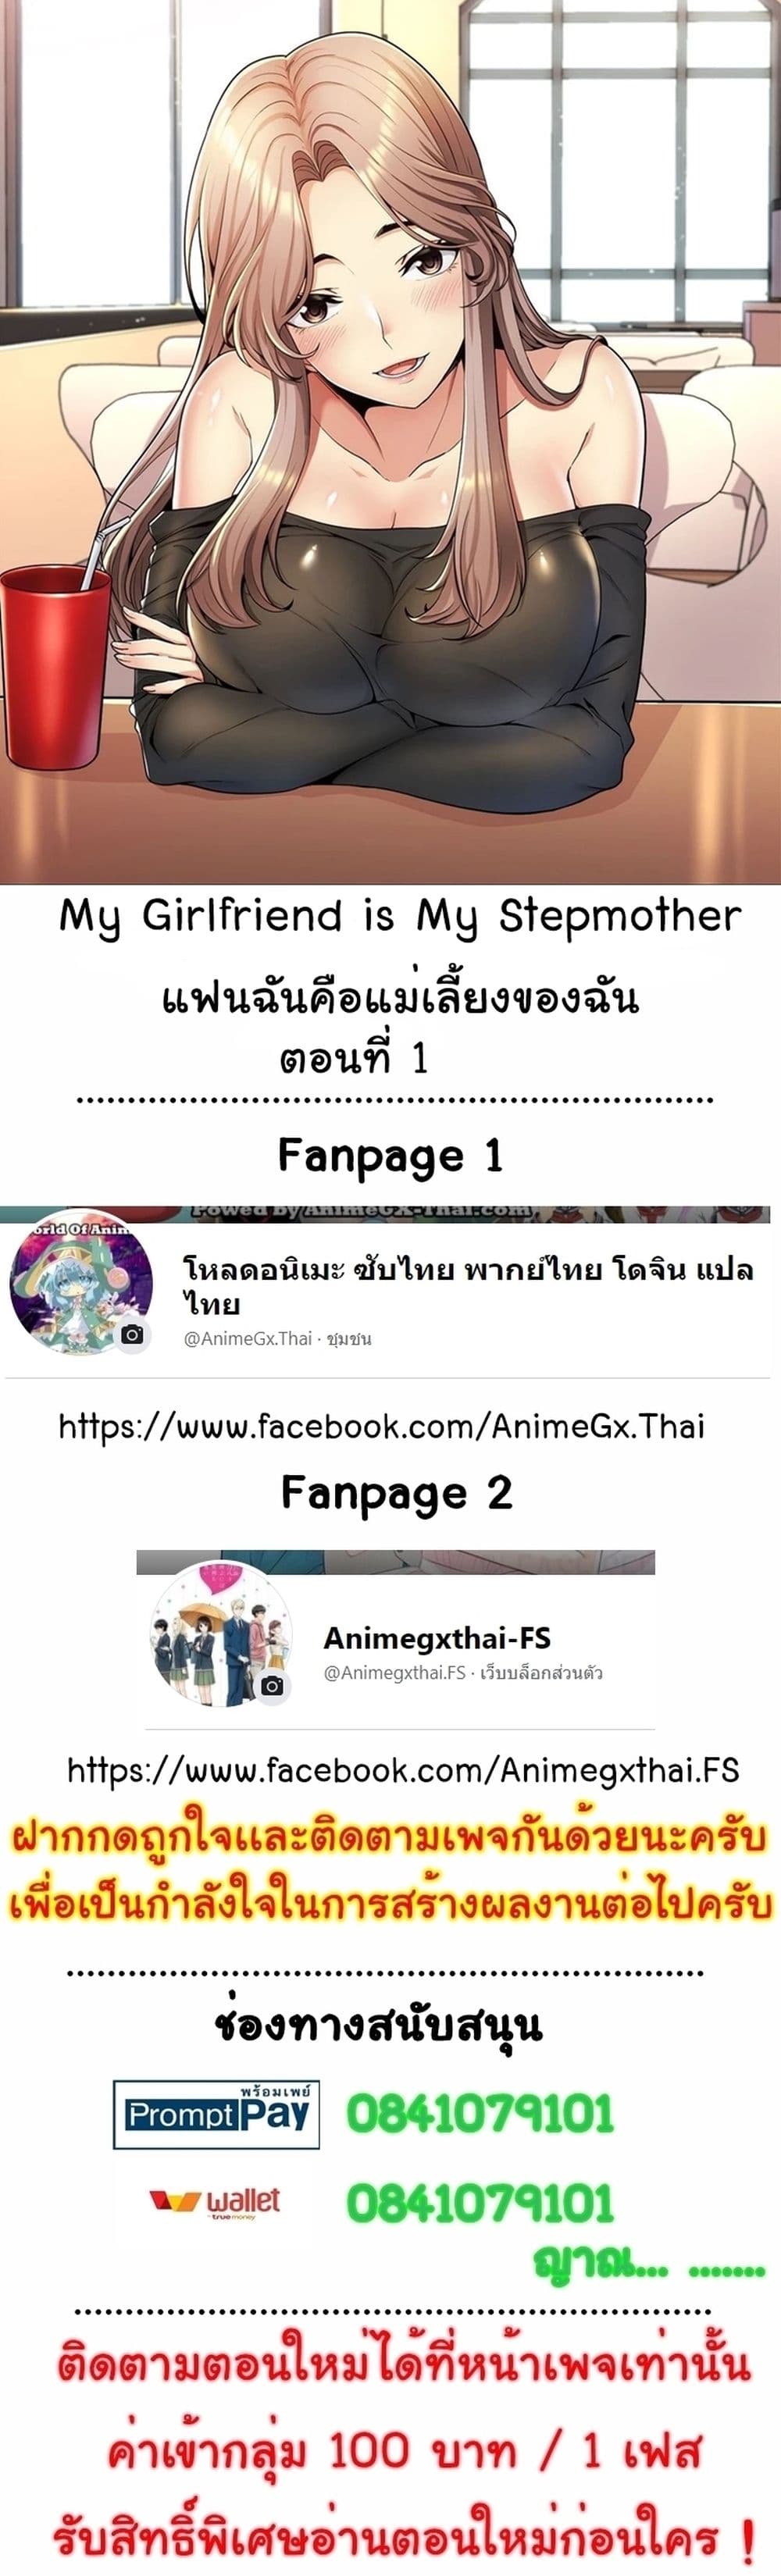 My Girlfriend is My Stepmother 1 (1)